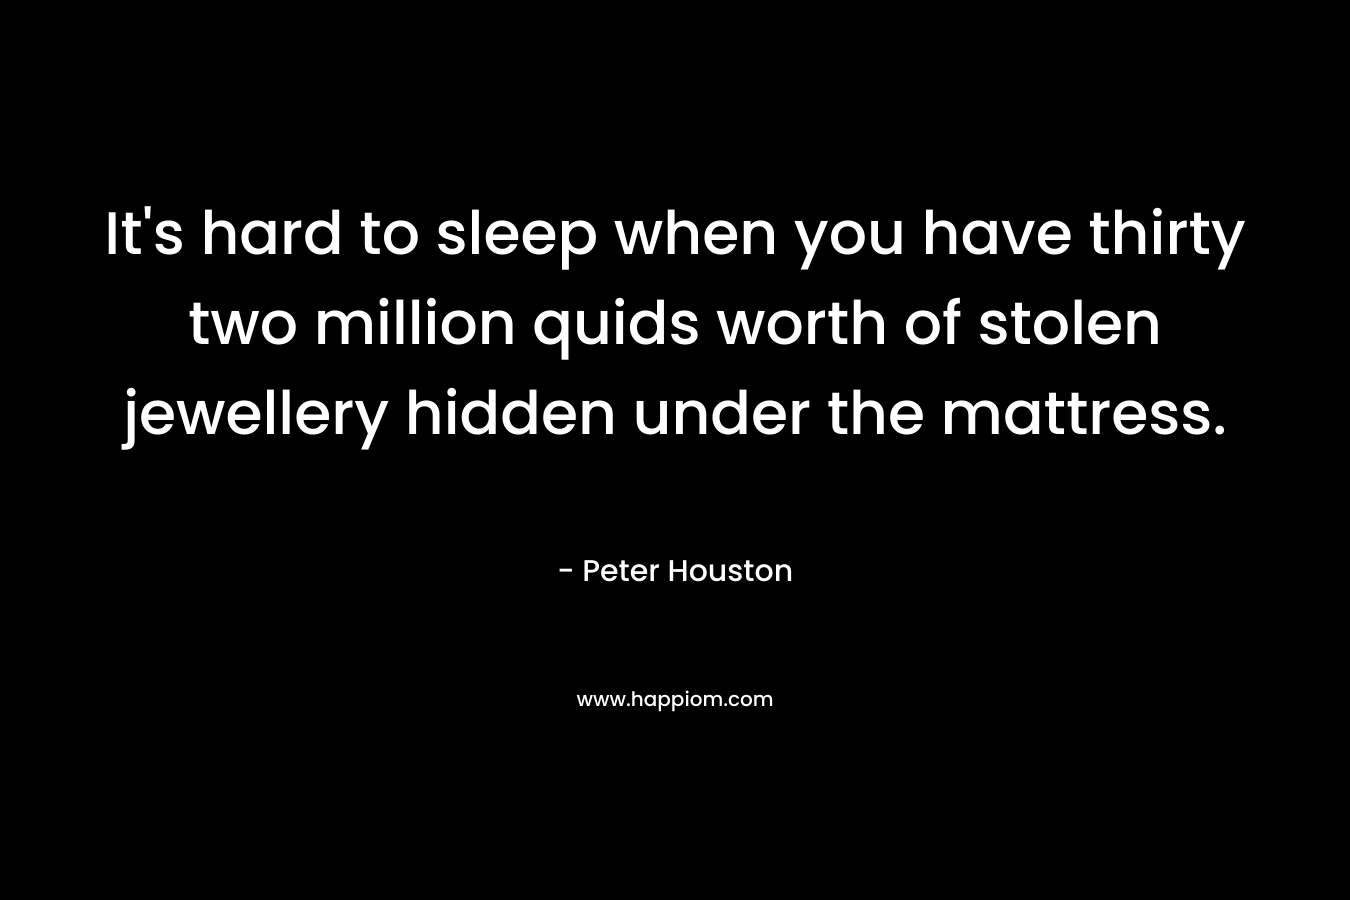 It's hard to sleep when you have thirty two million quids worth of stolen jewellery hidden under the mattress.